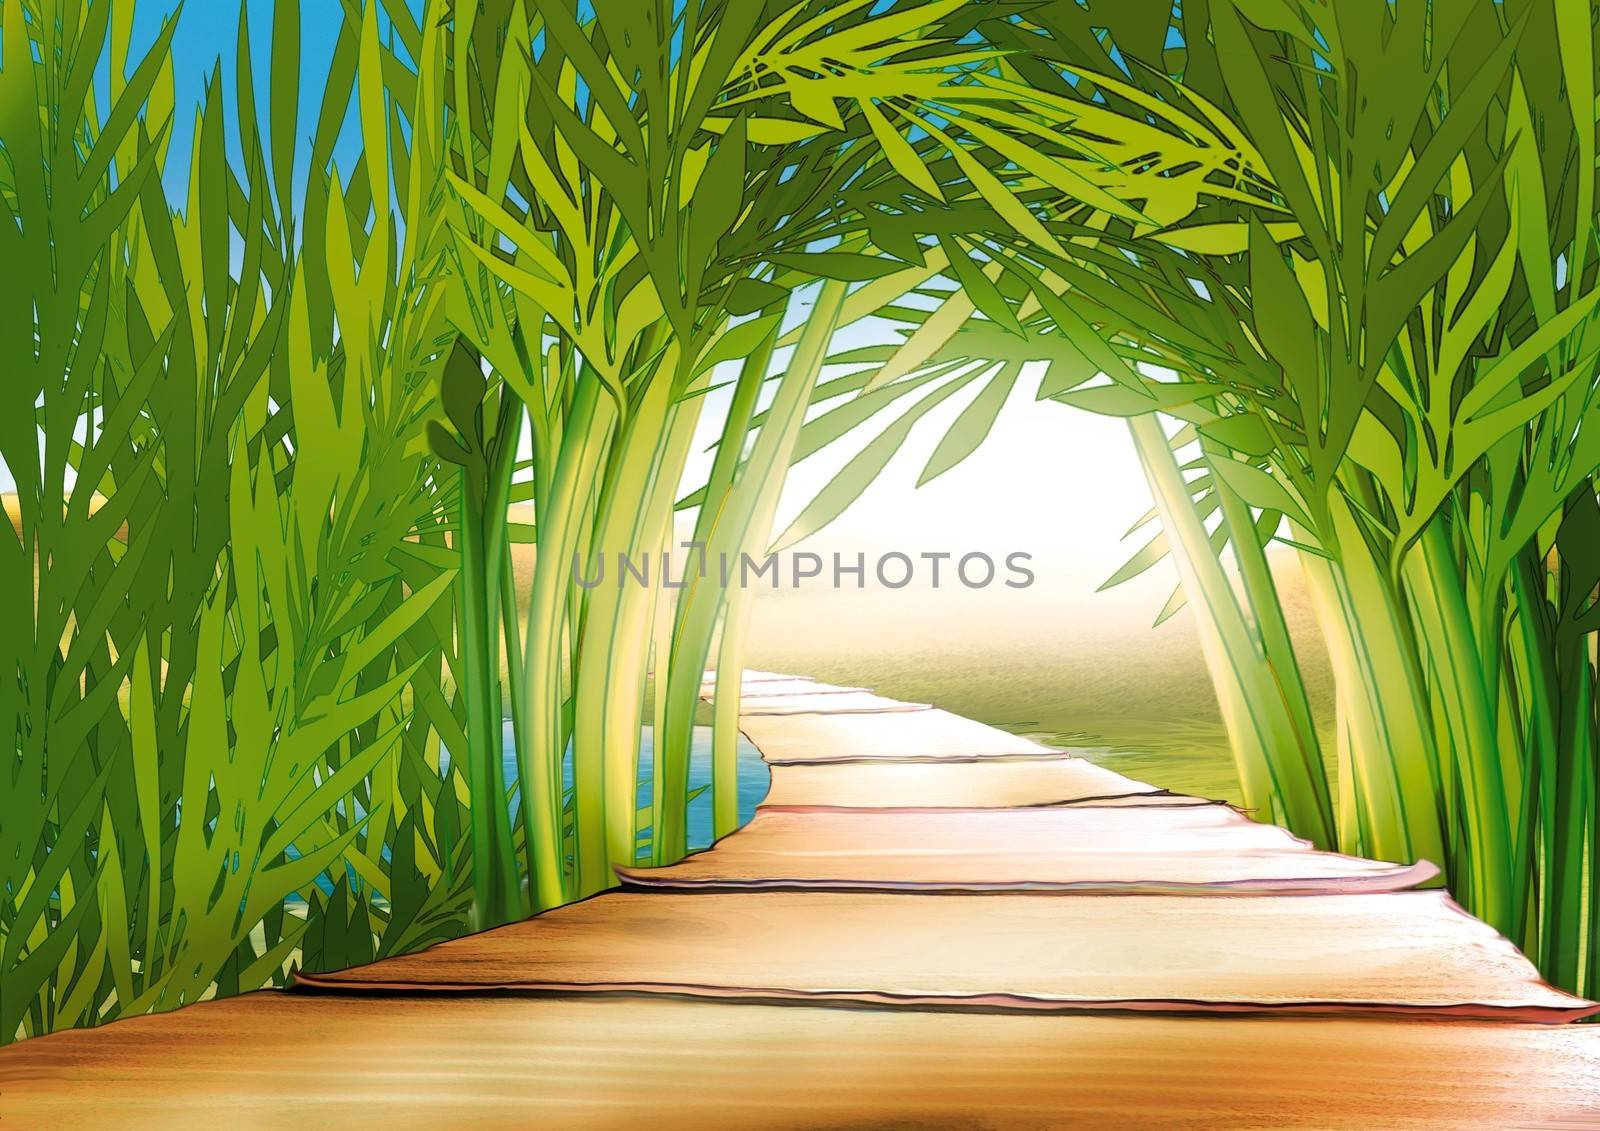 Bamboo Grove by illustratorCZ